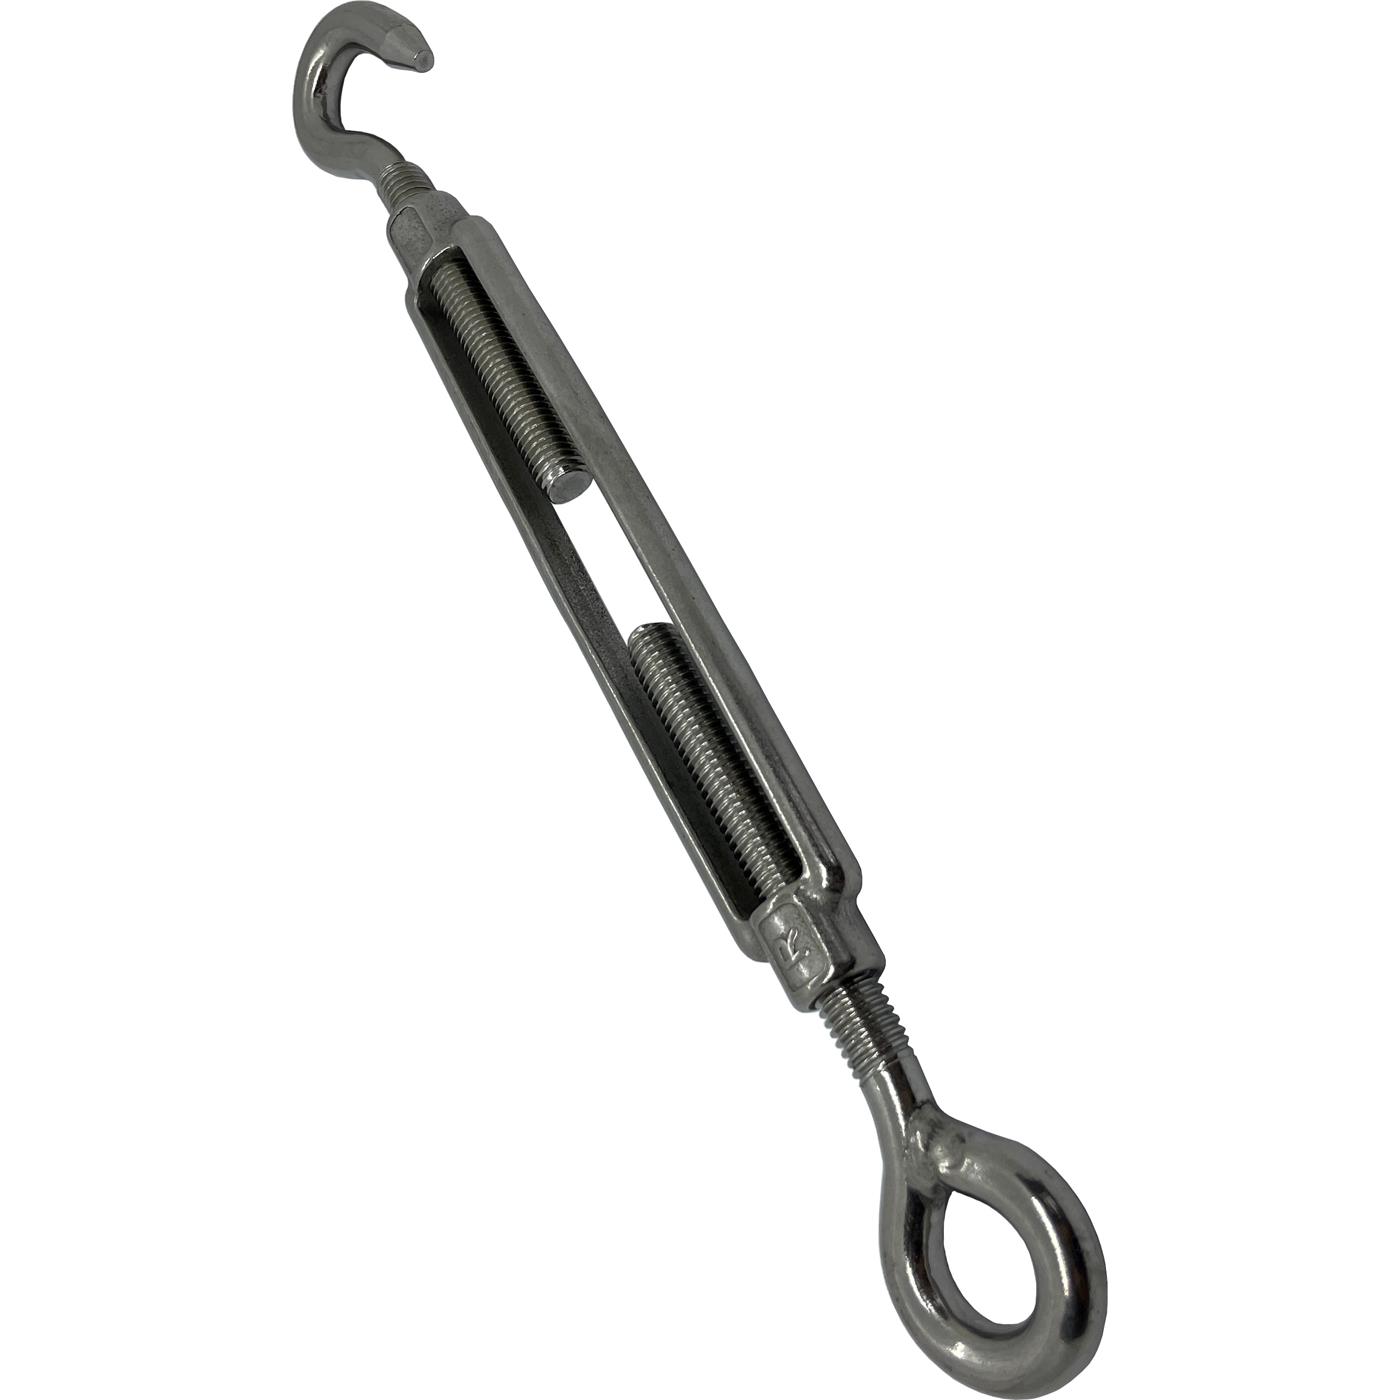 Rope tensioner Eyelet-Hook Stainless steel V2A 304 M6 Turnbuckle Shroud clamp